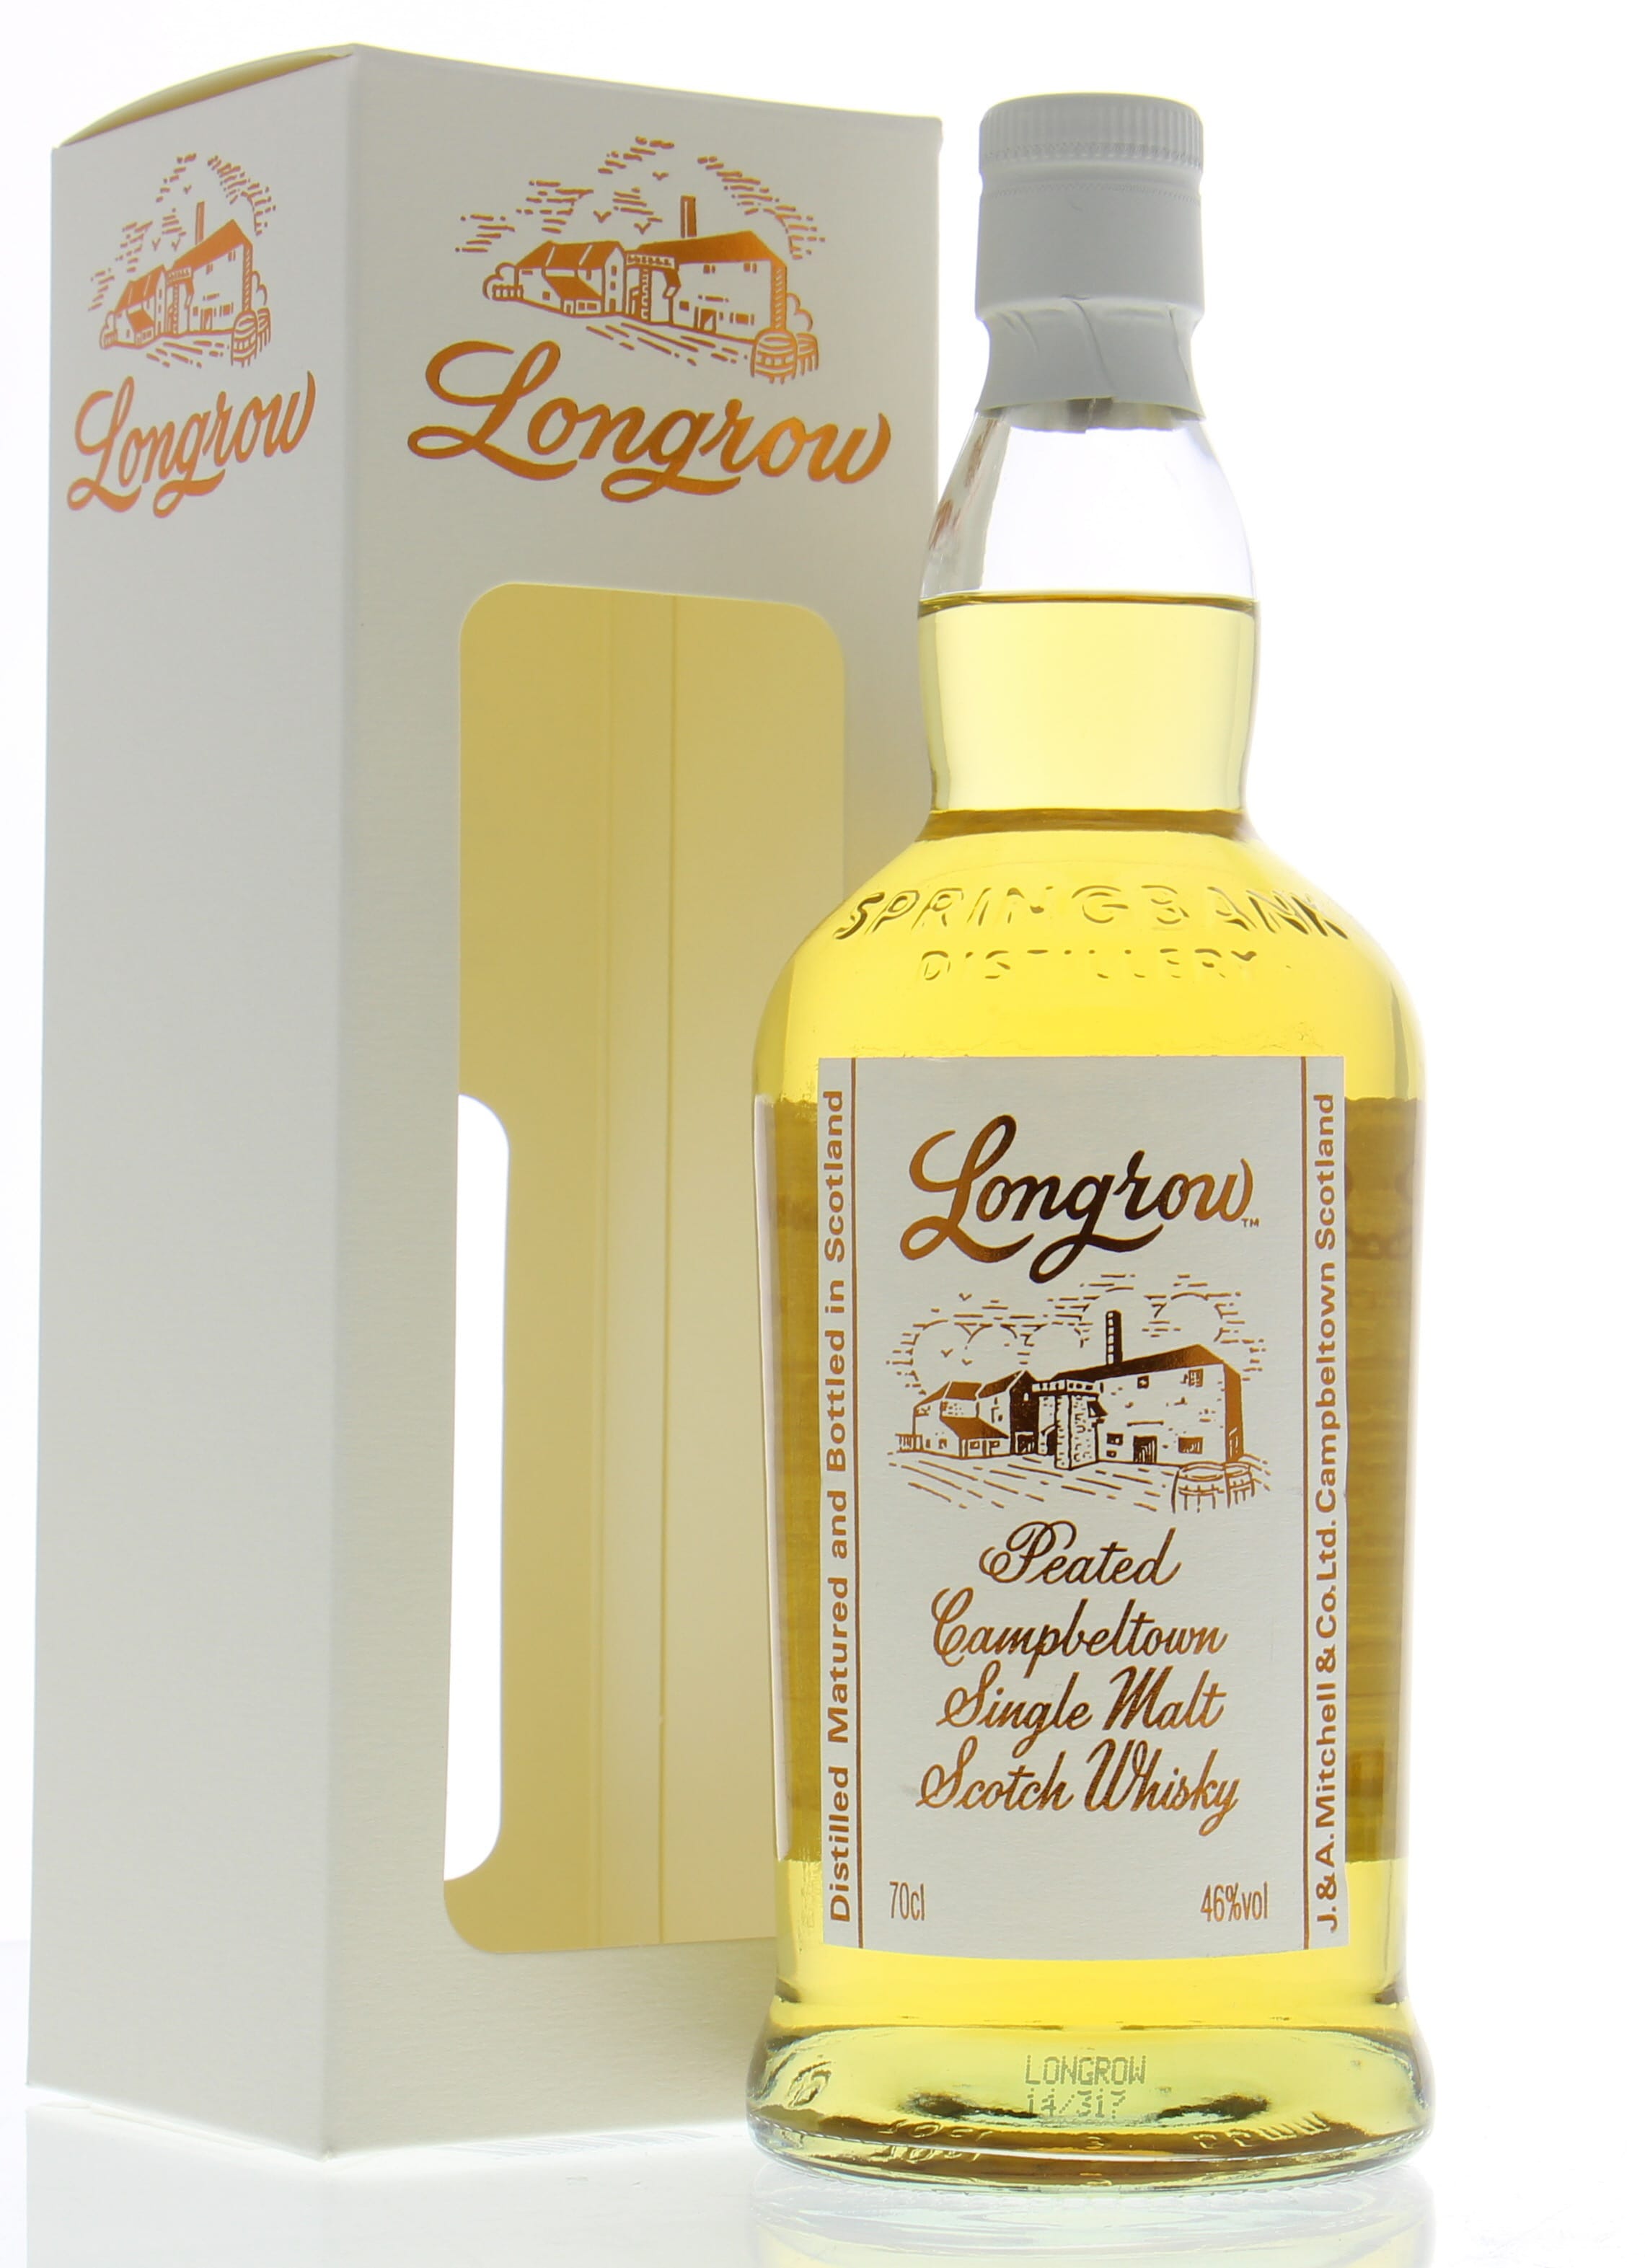 Longrow - Longrow Peated Campbeltown Single Malt Scotch Whisky Botteling Serie Bottle code 14/317 46% NAS In Original Container